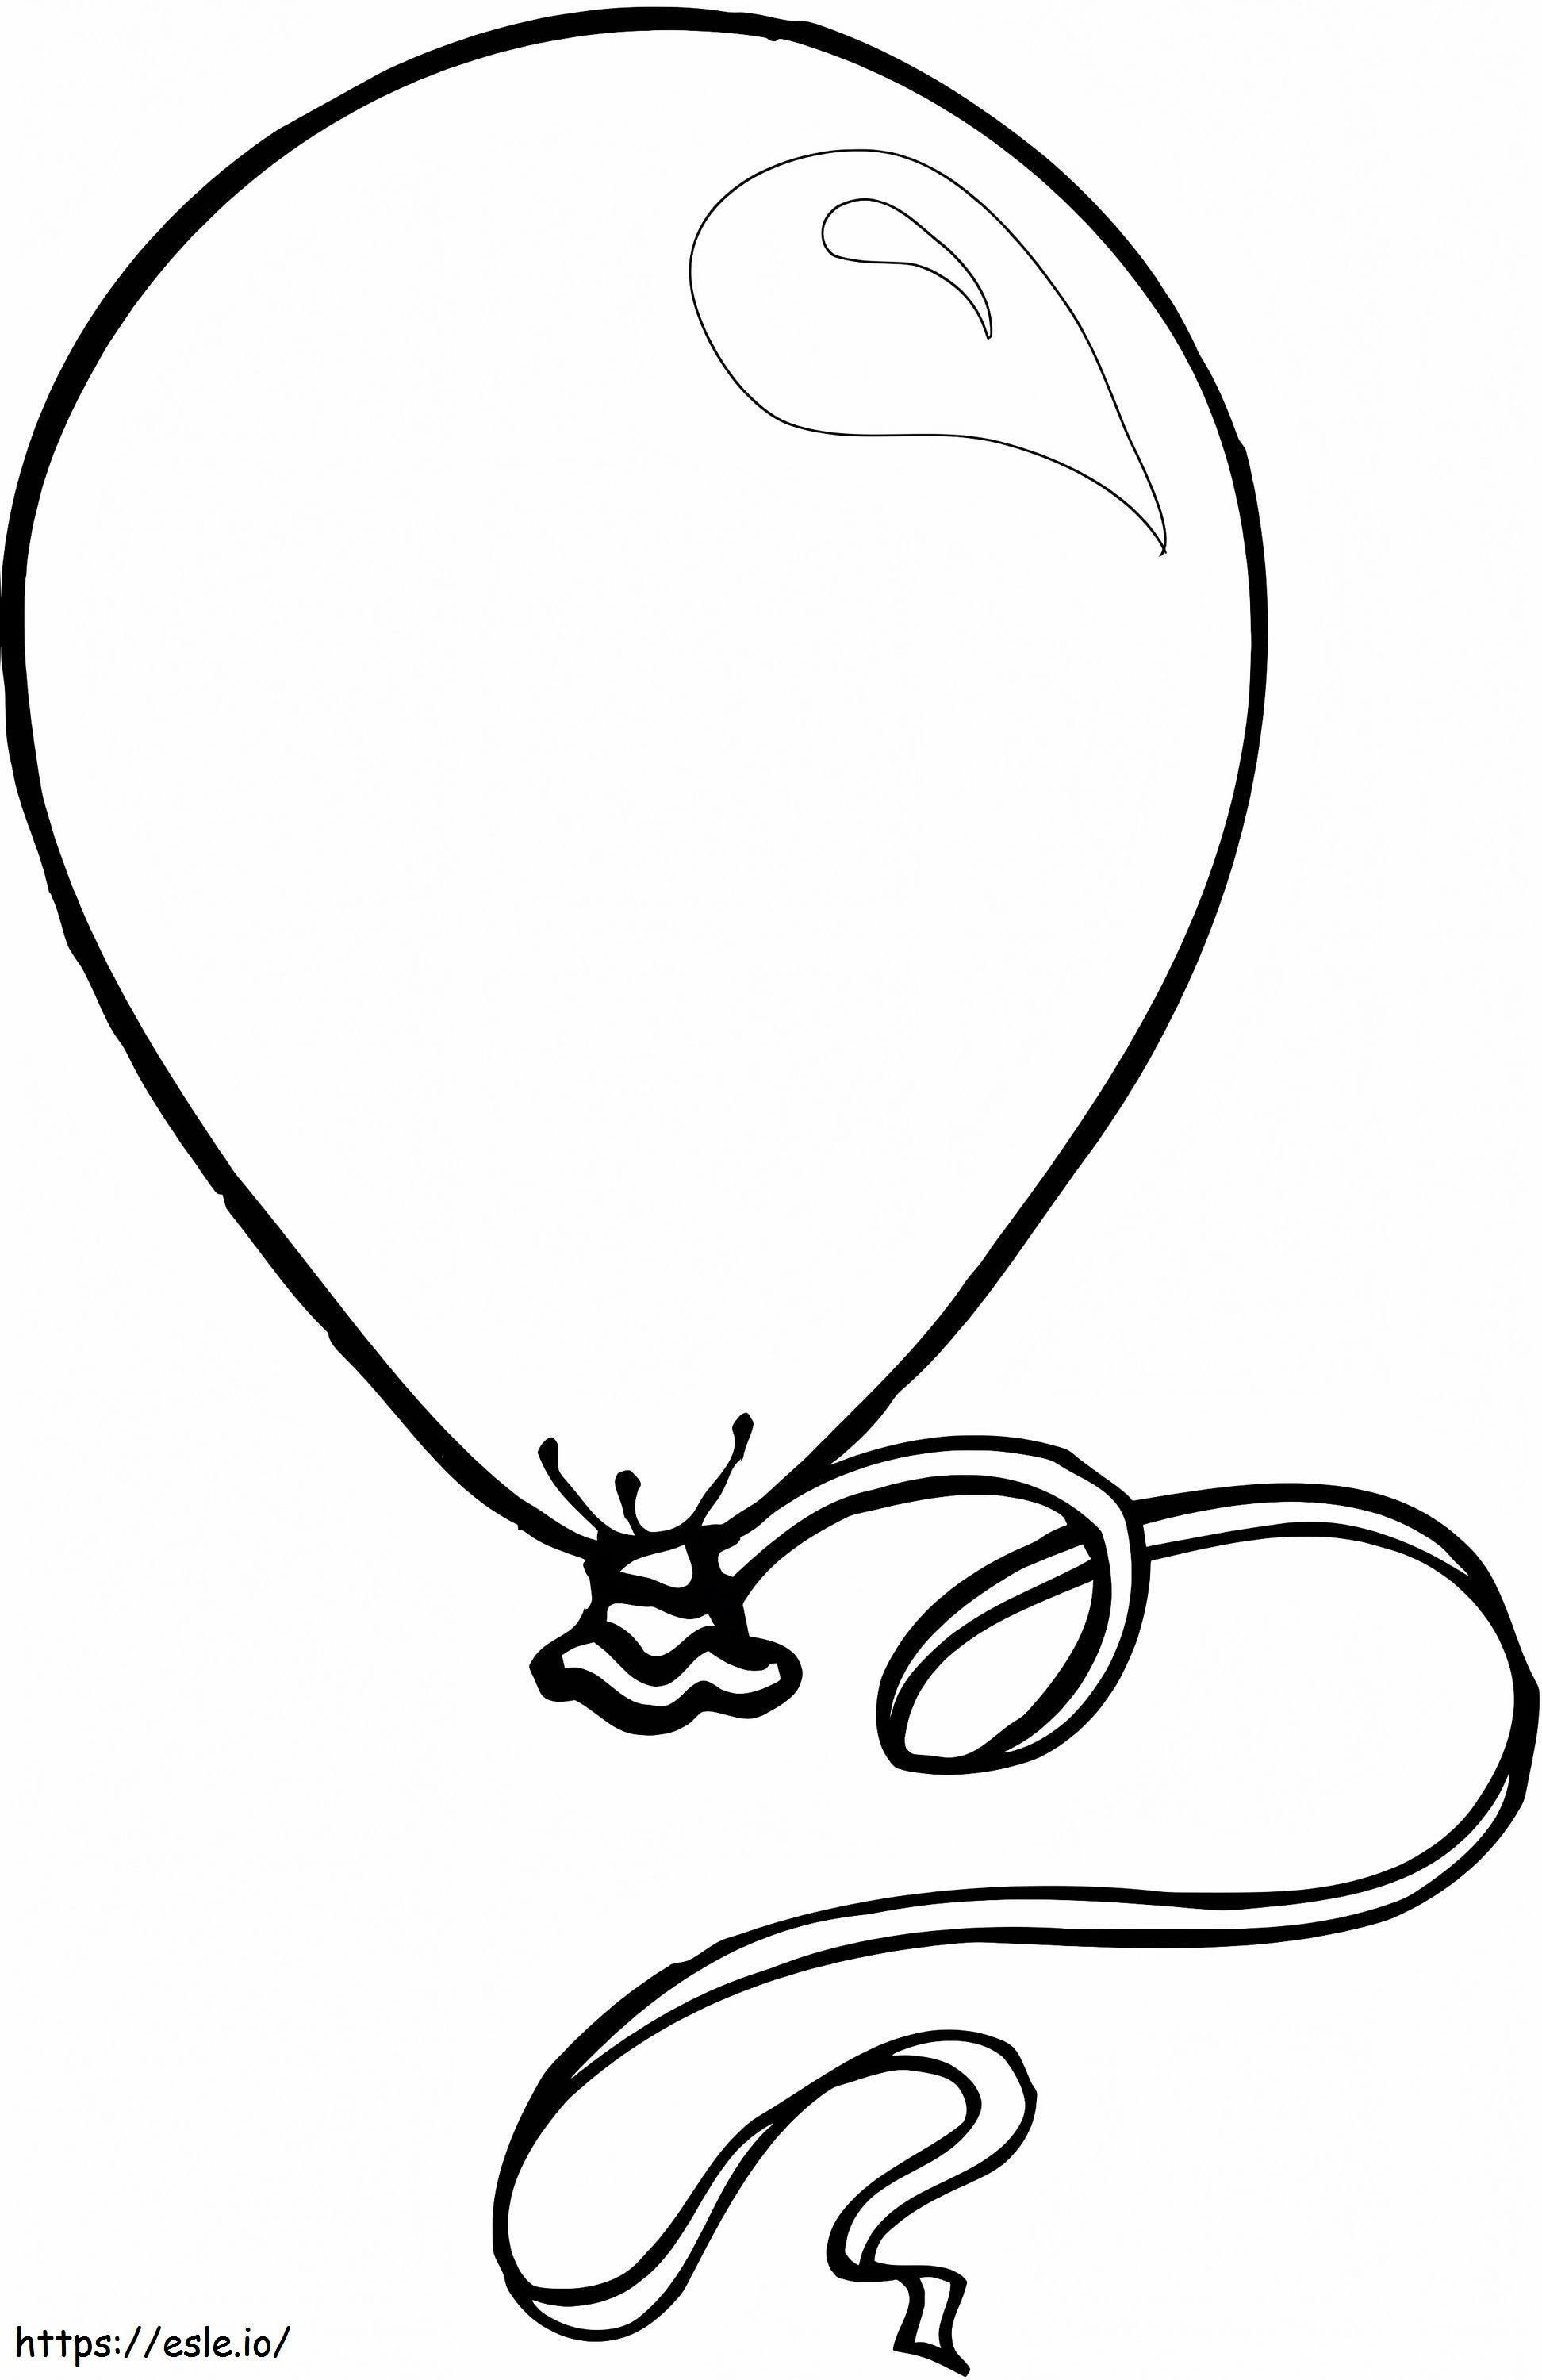 Einfacher Ballon ausmalbilder